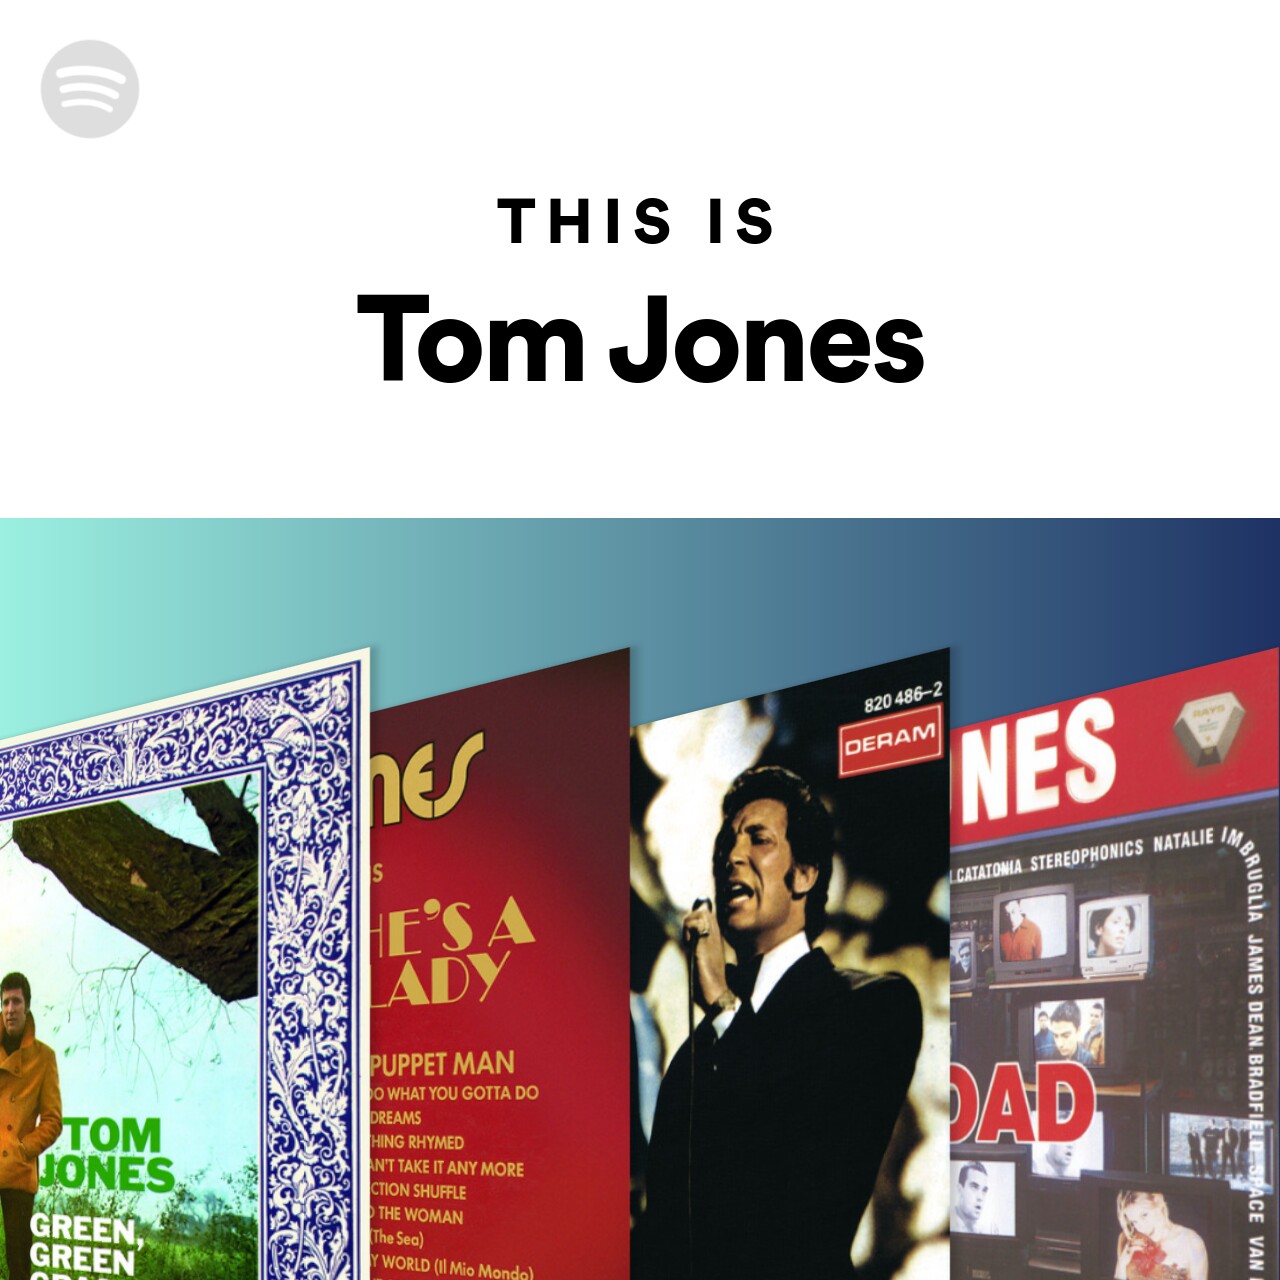 This is Tom Jones